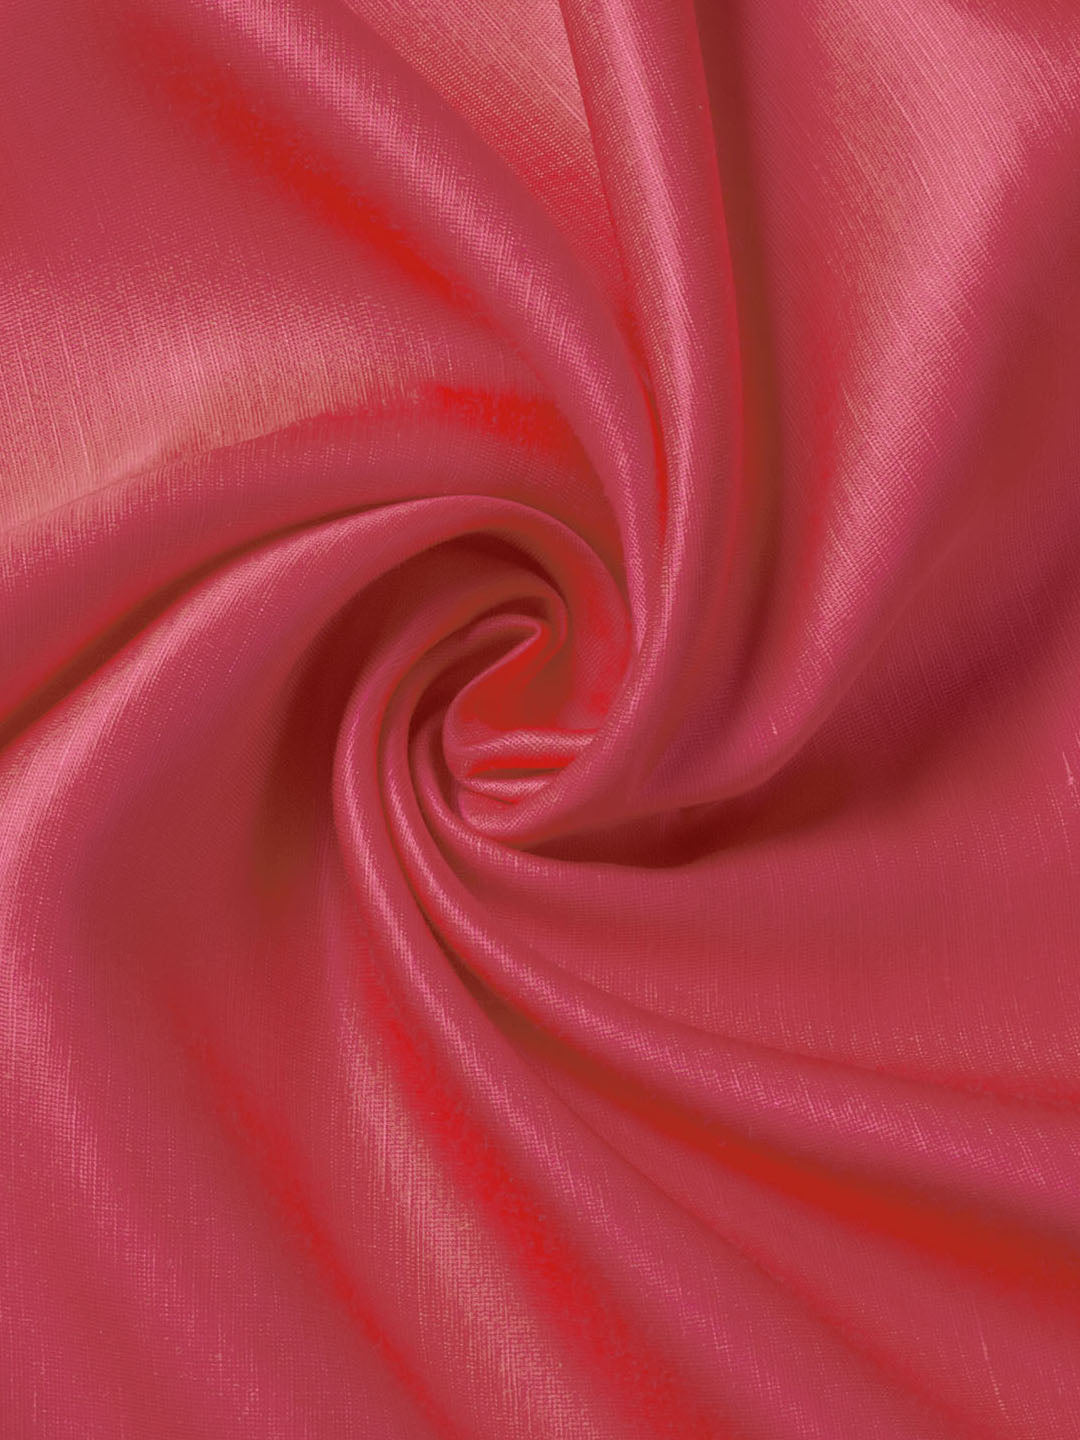 Rose Linen Satin Fabric